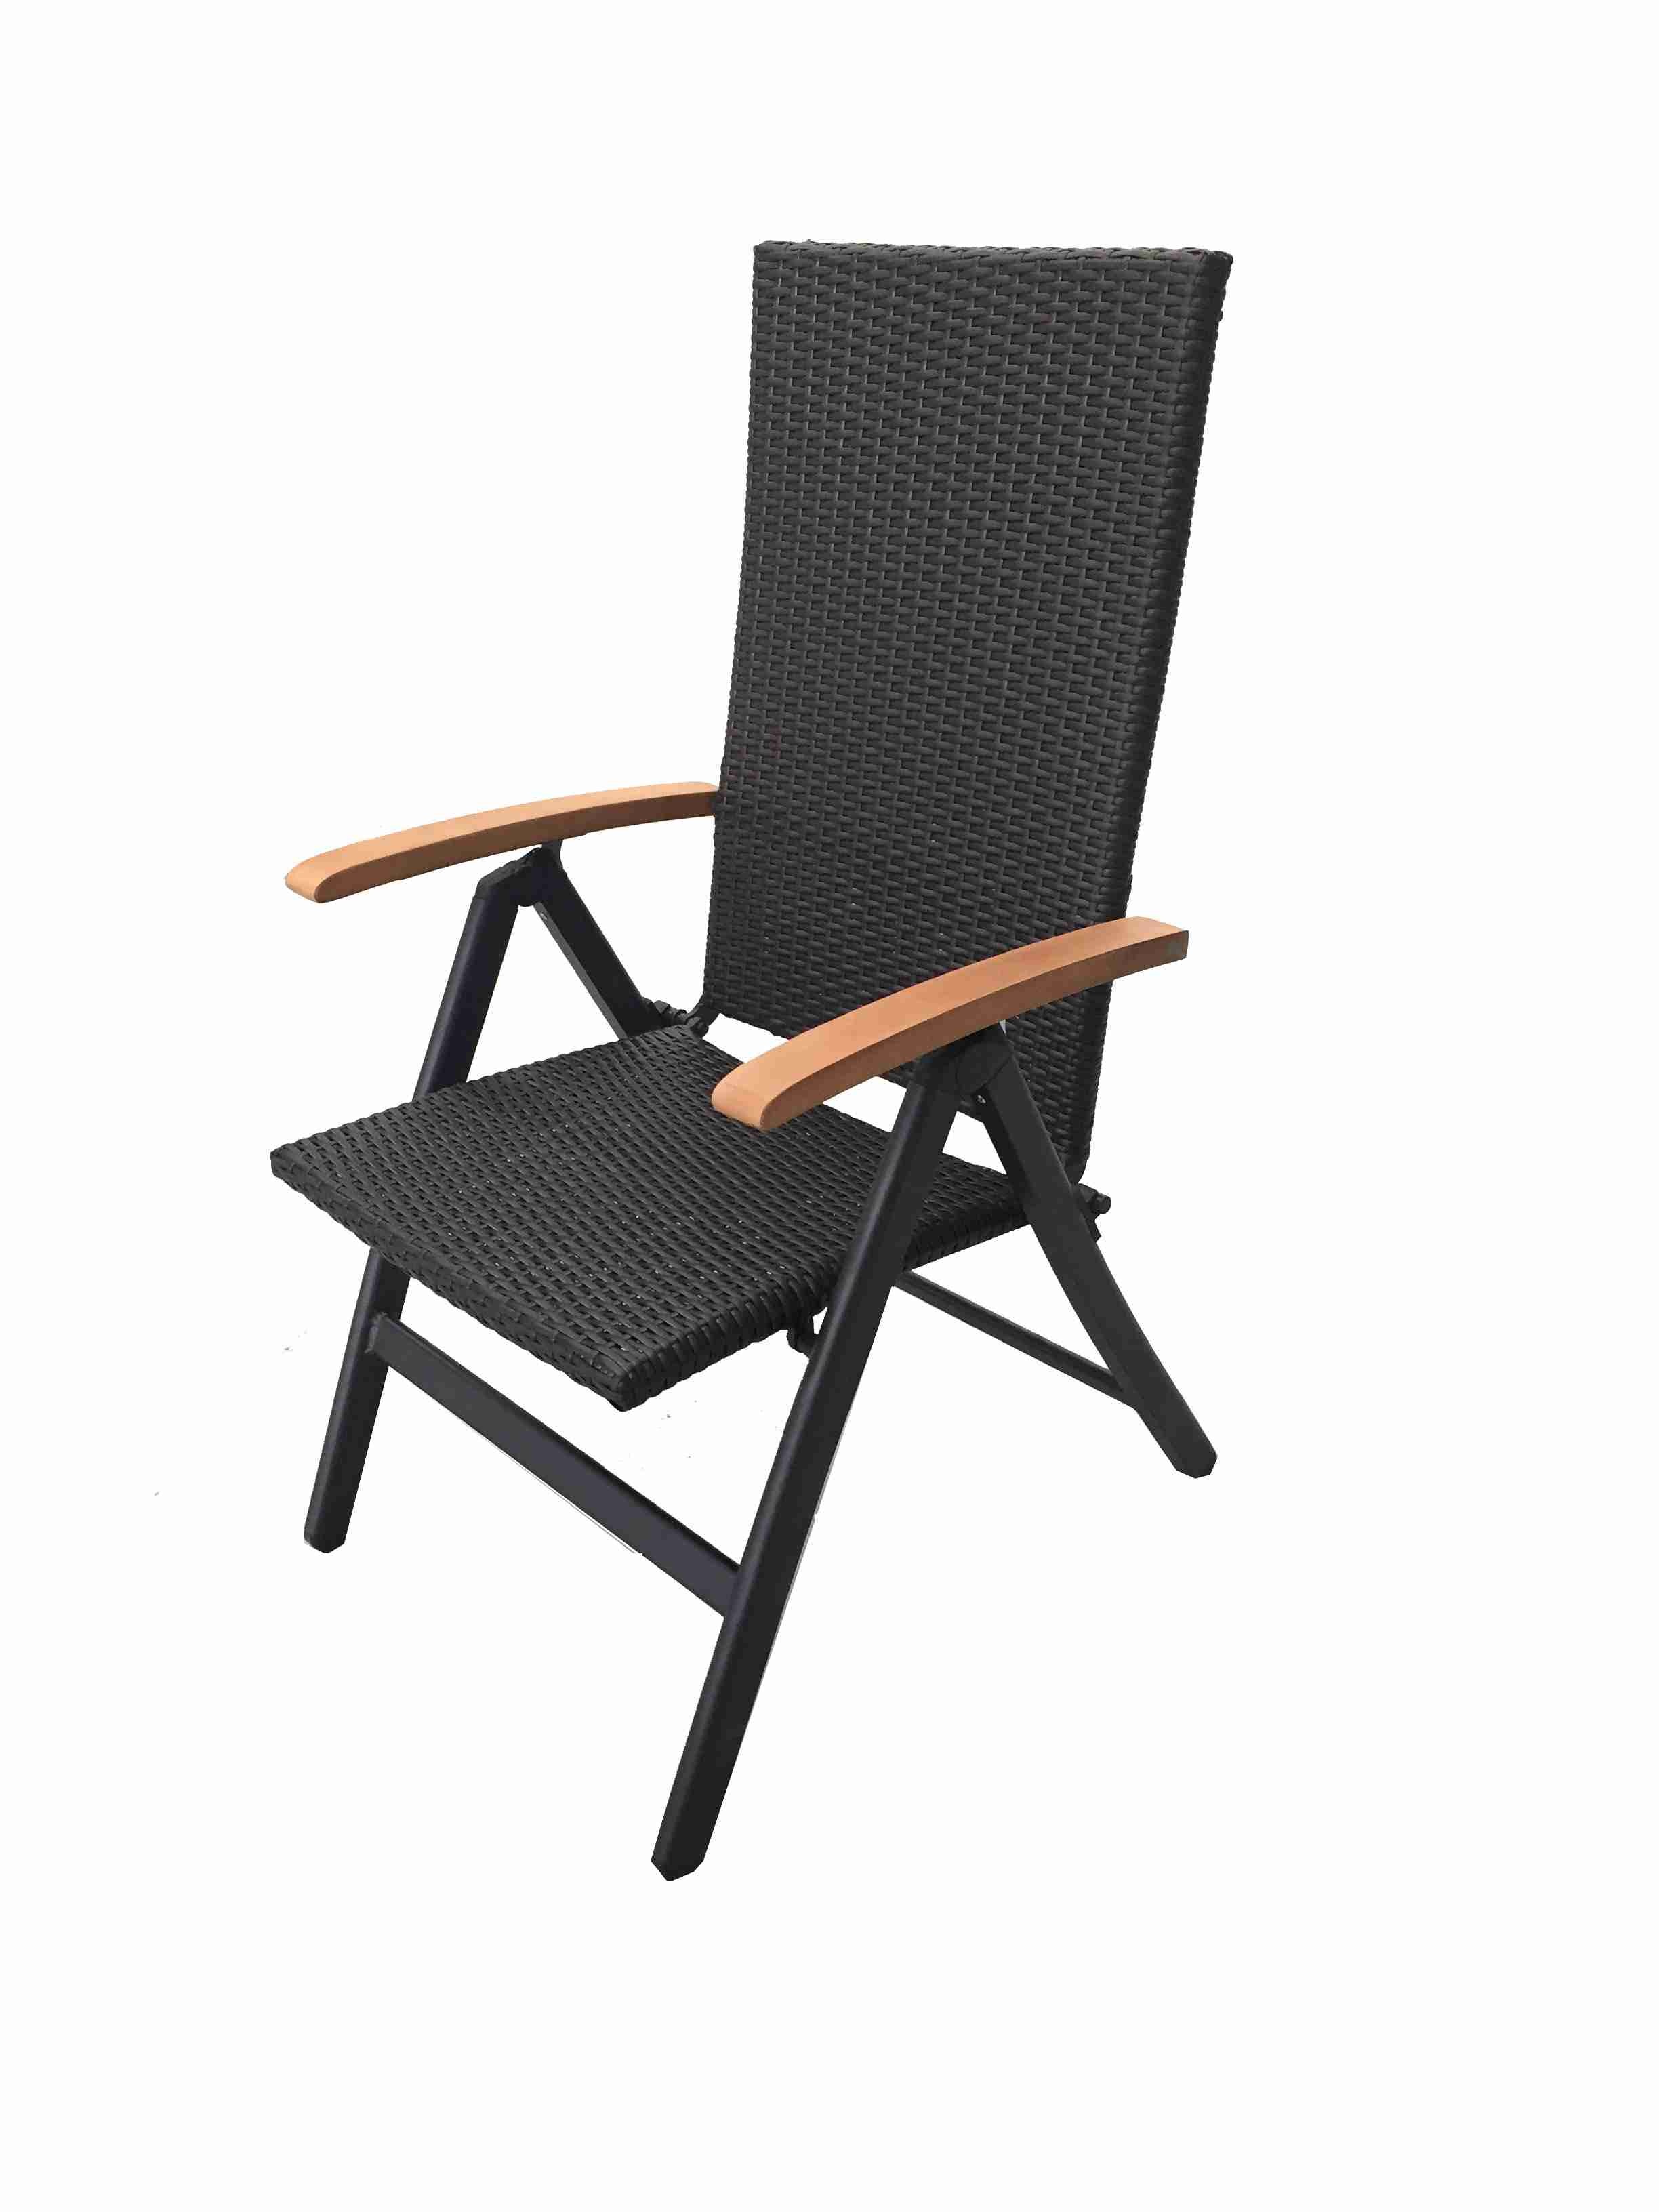 homegarden rattan folding chair with wood armrest